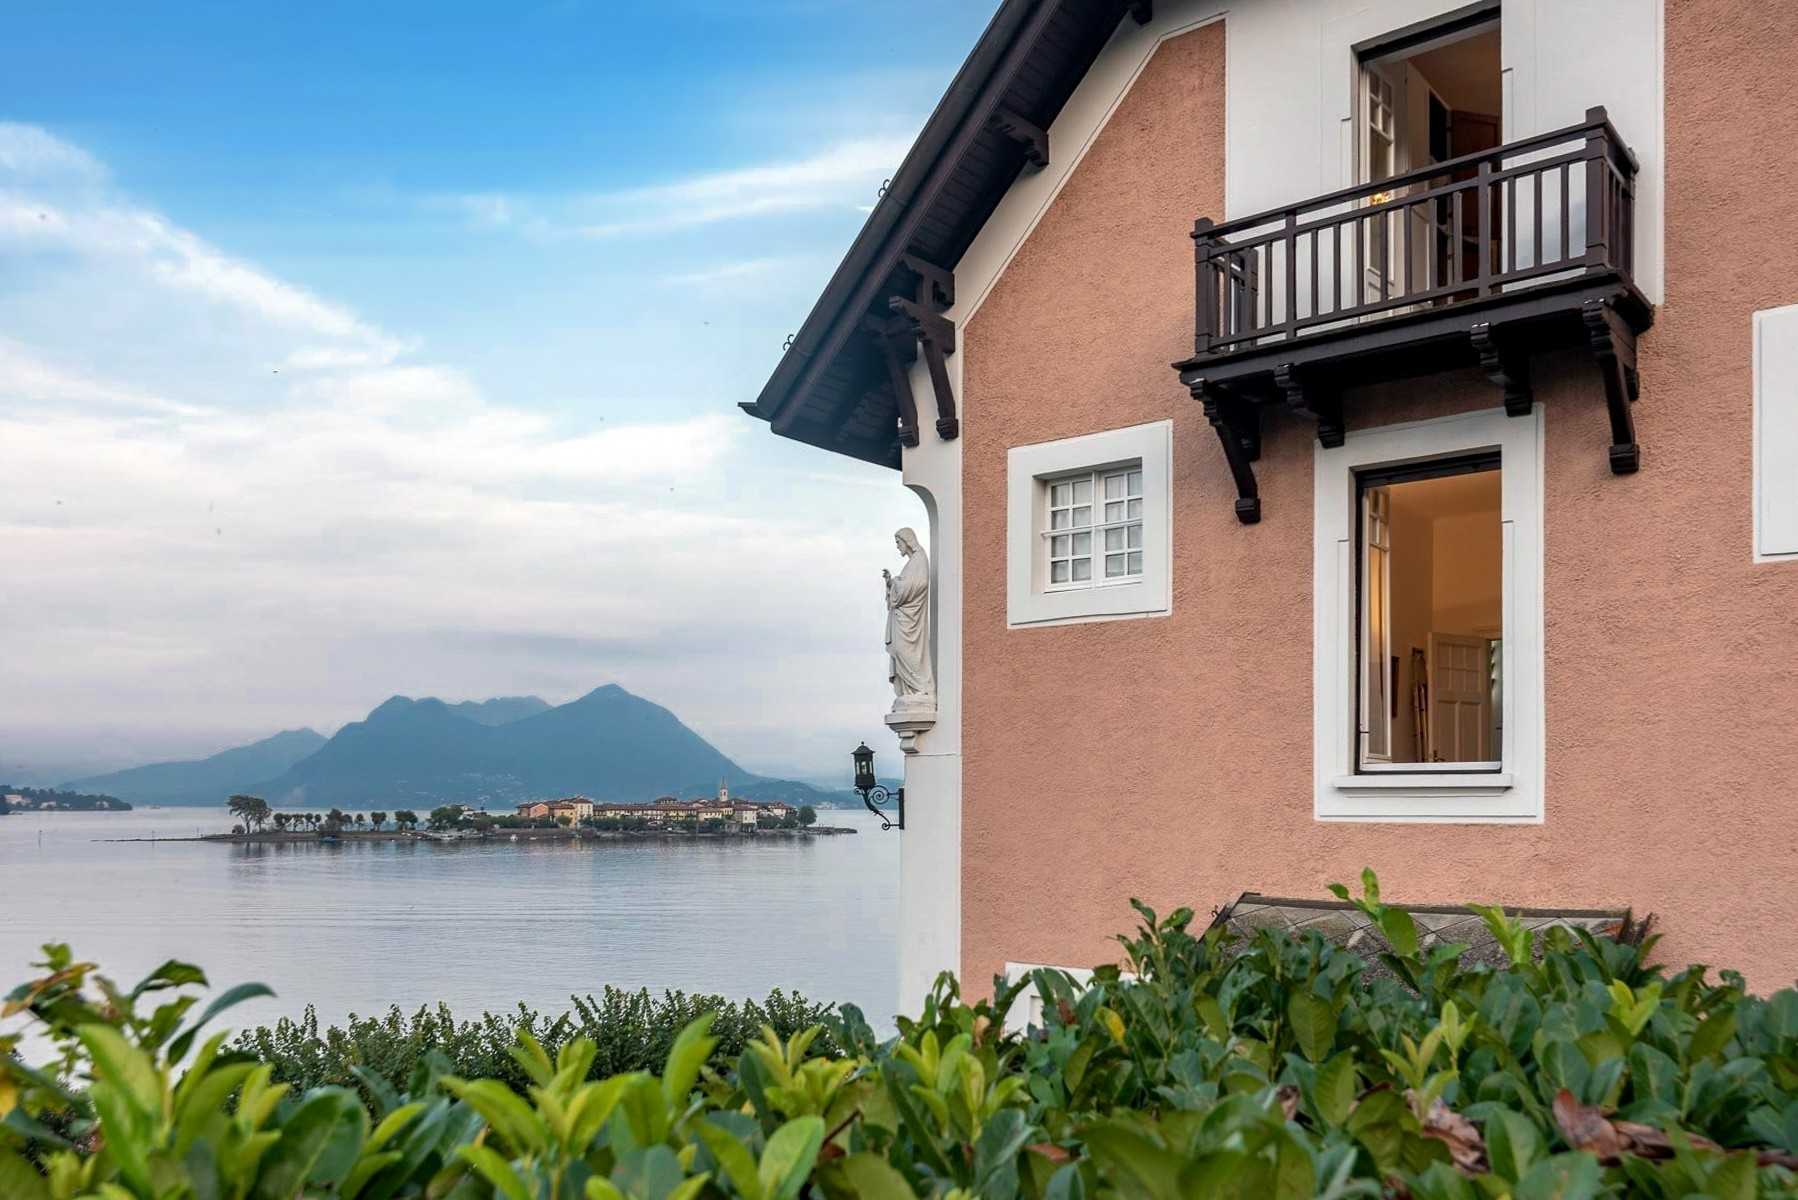 Fotos Villa in Baveno am Ufer des Lago Maggiore mit Bootsanleger